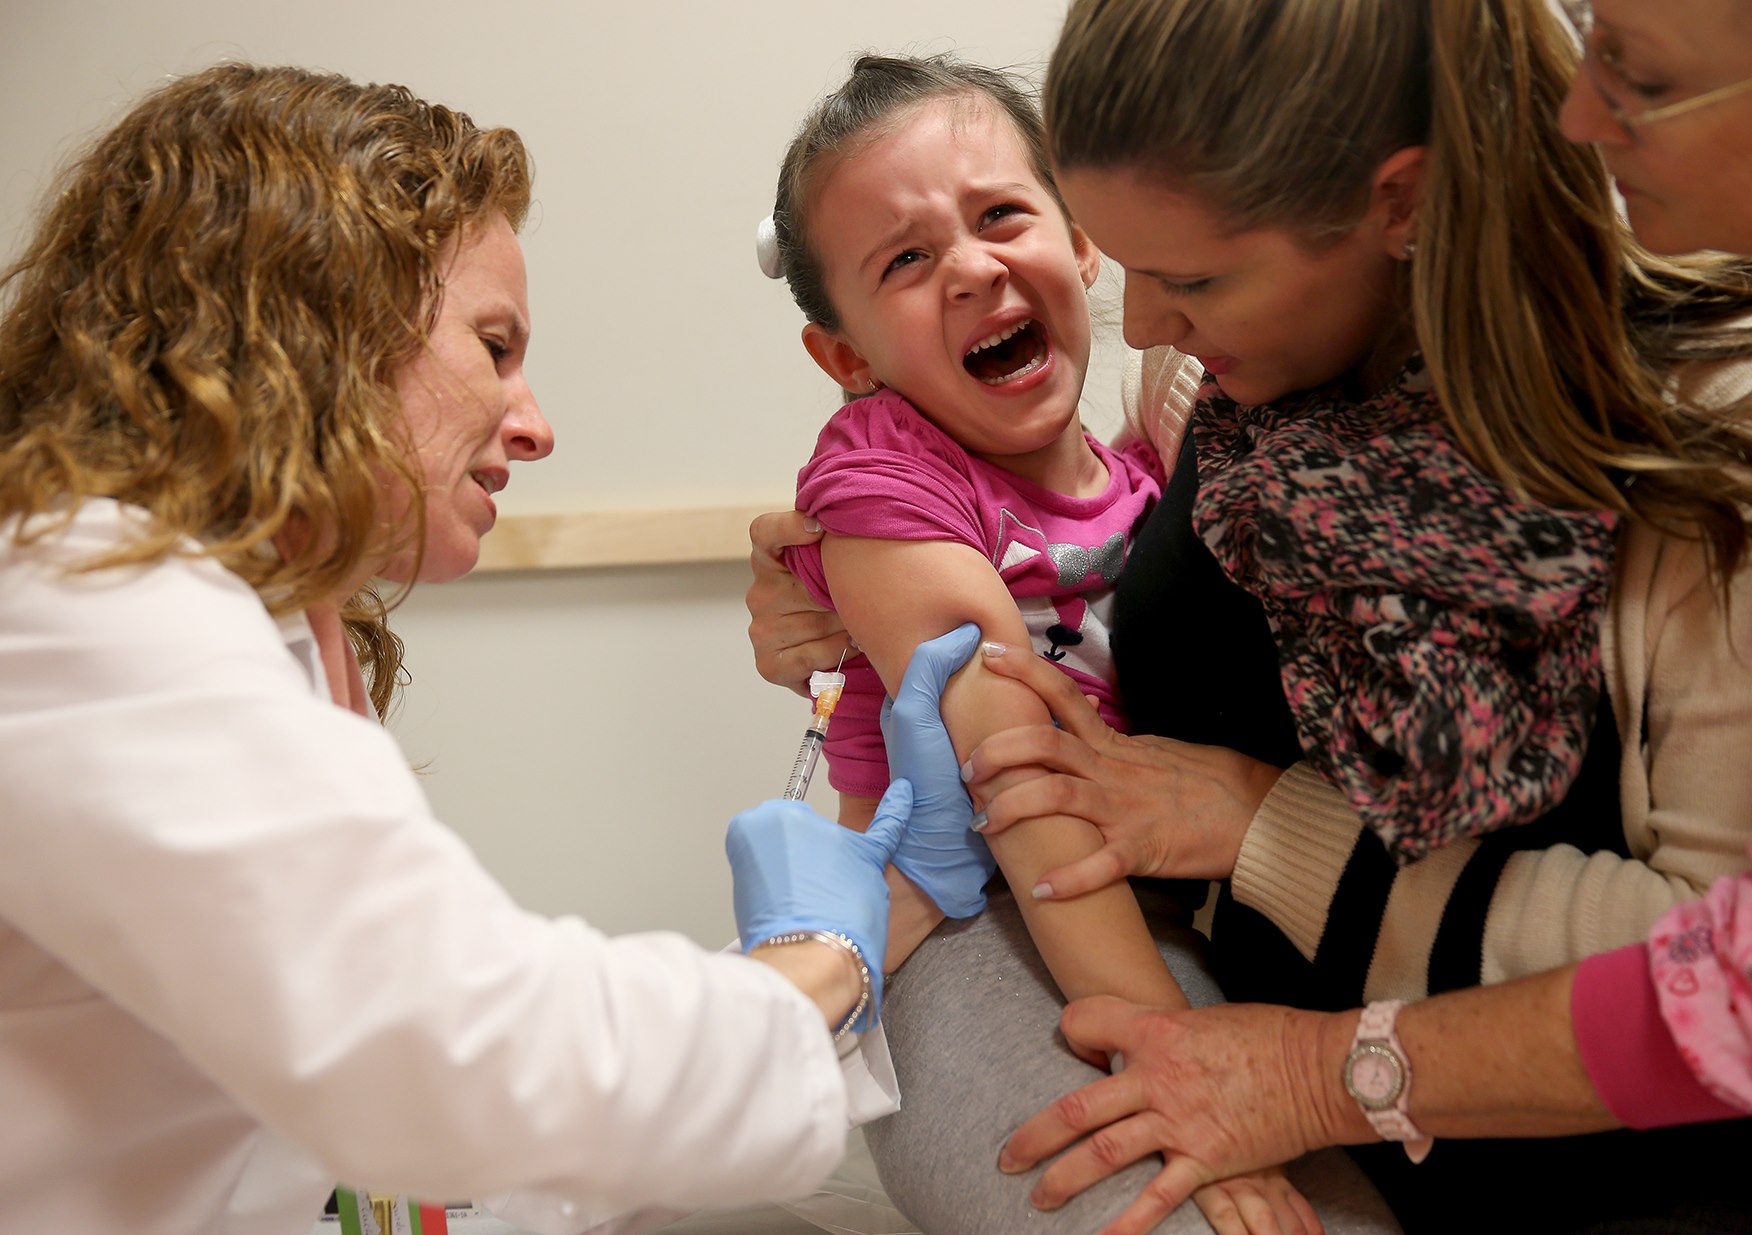 Image: NEWSFLASH: Measles is NO BIG DEAL